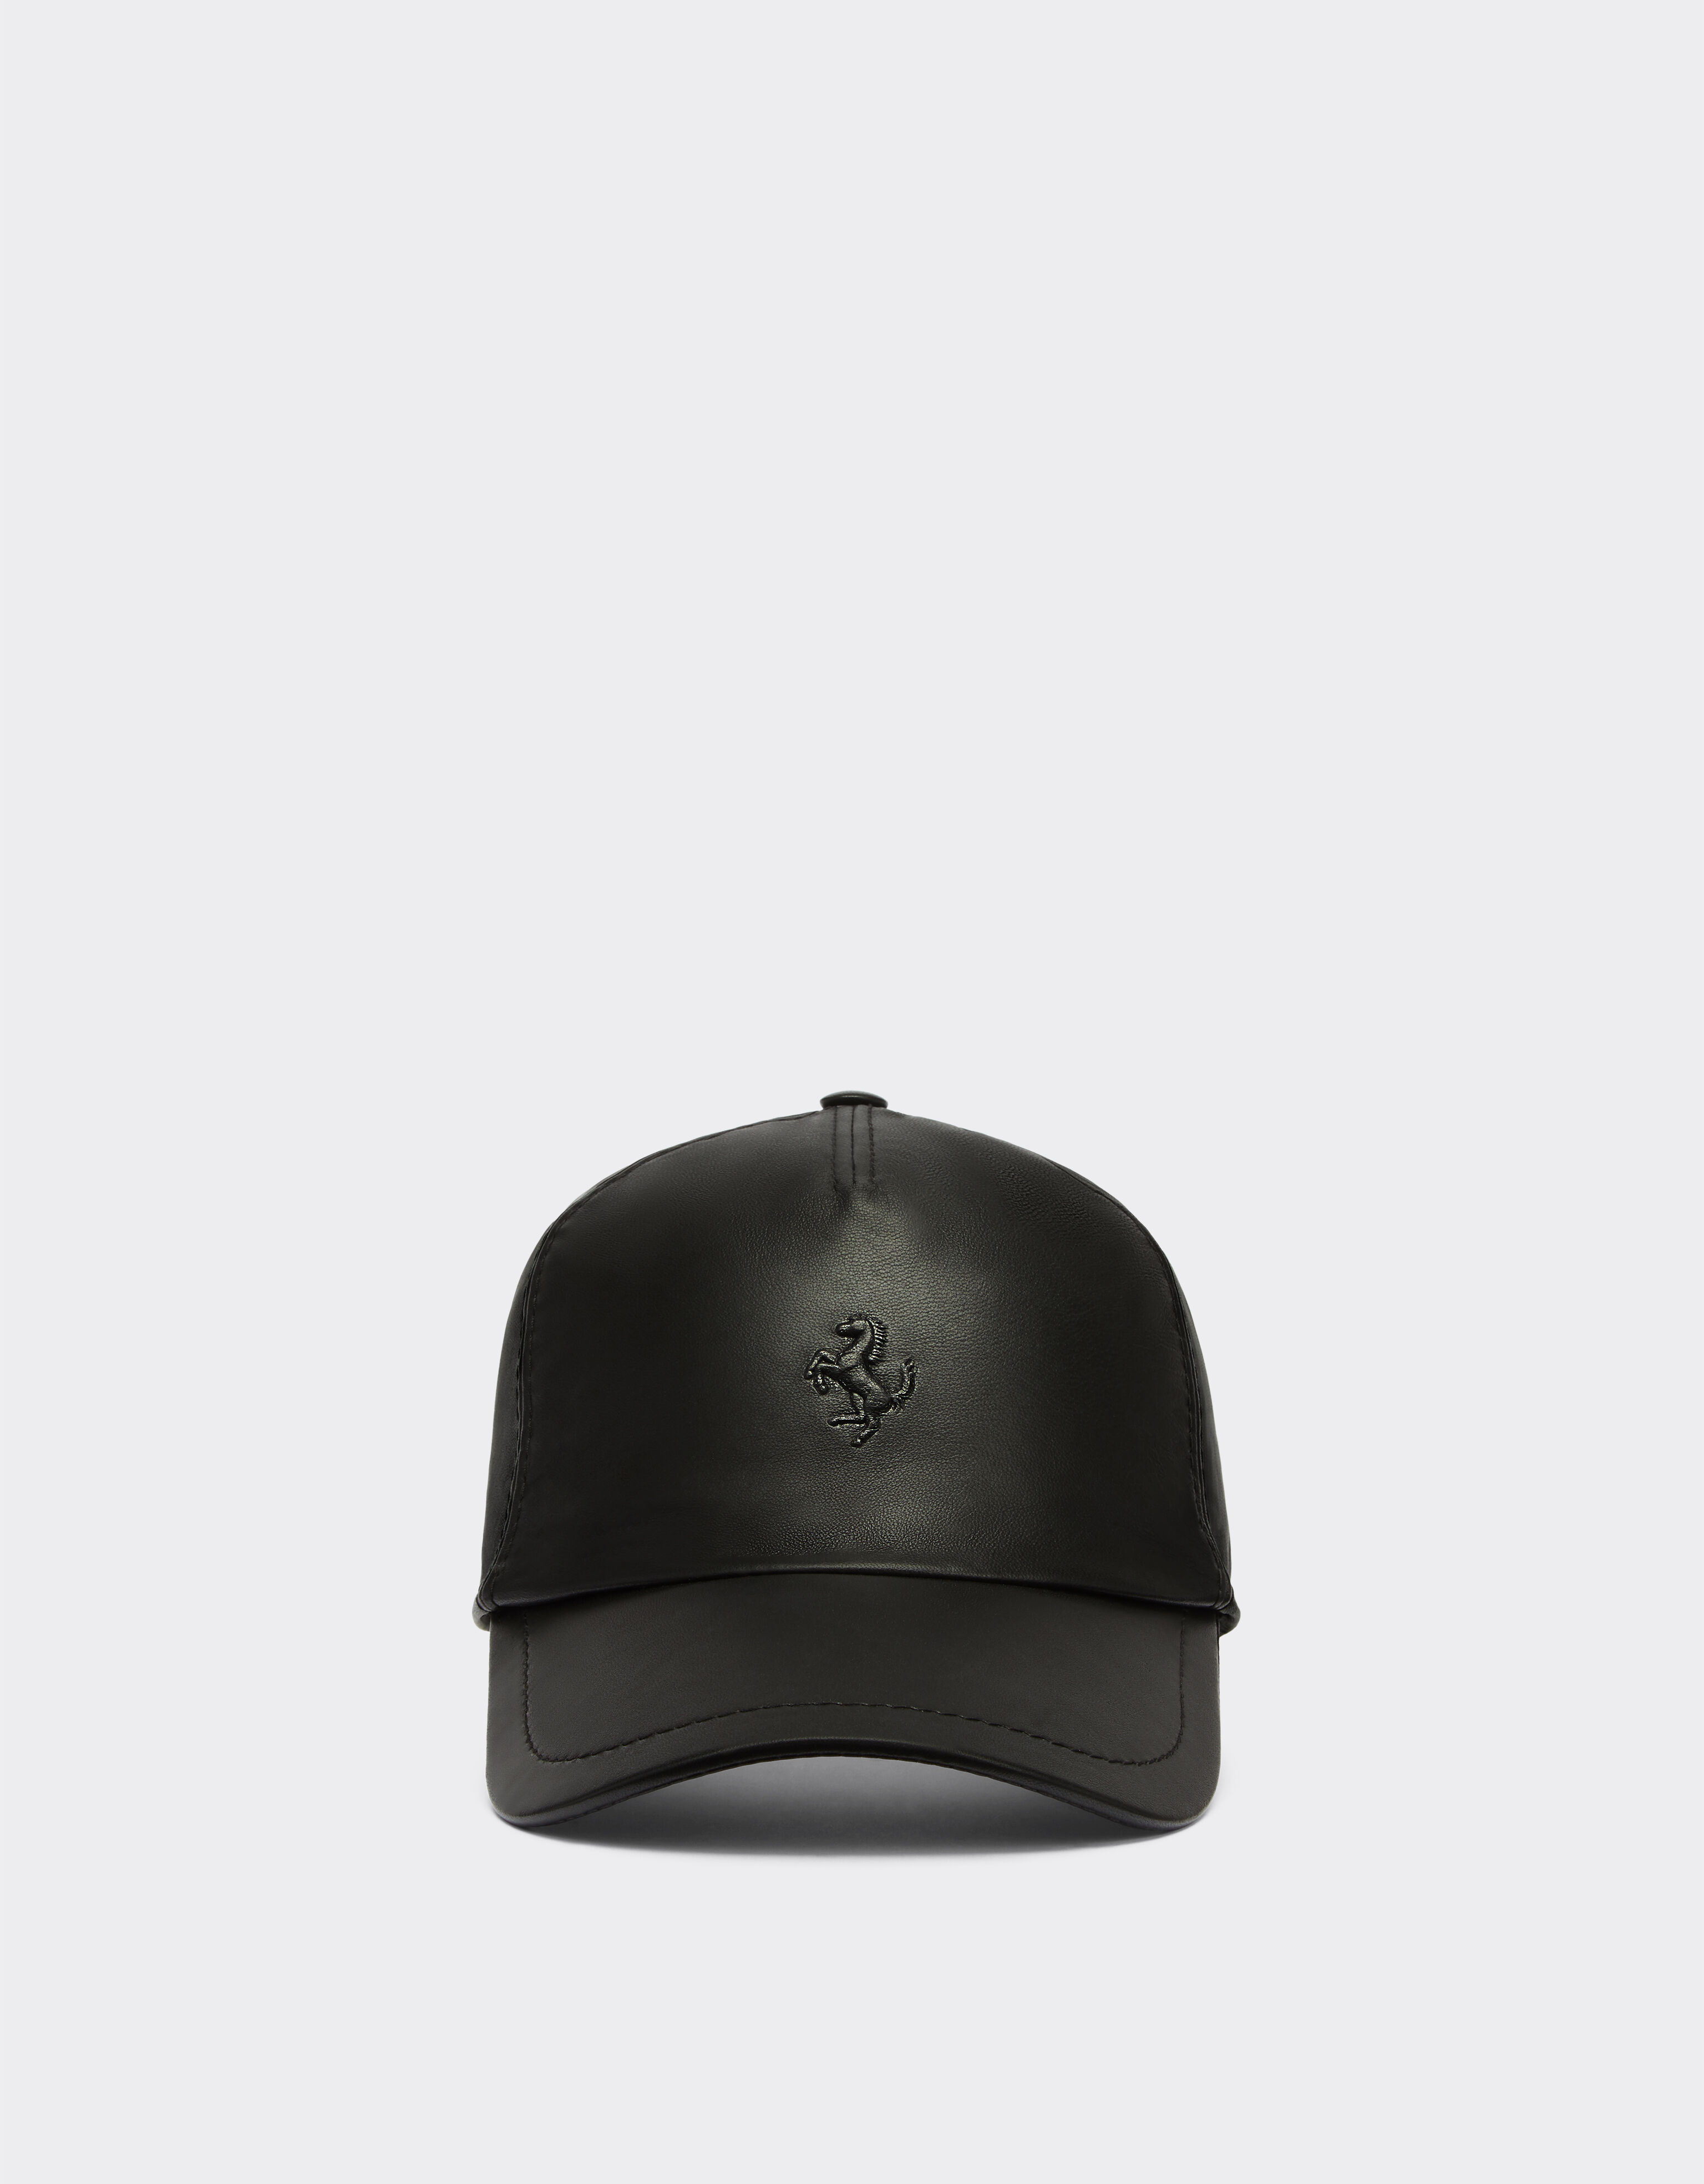 Ferrari Baseball cap with Prancing Horse logo Black 20264f